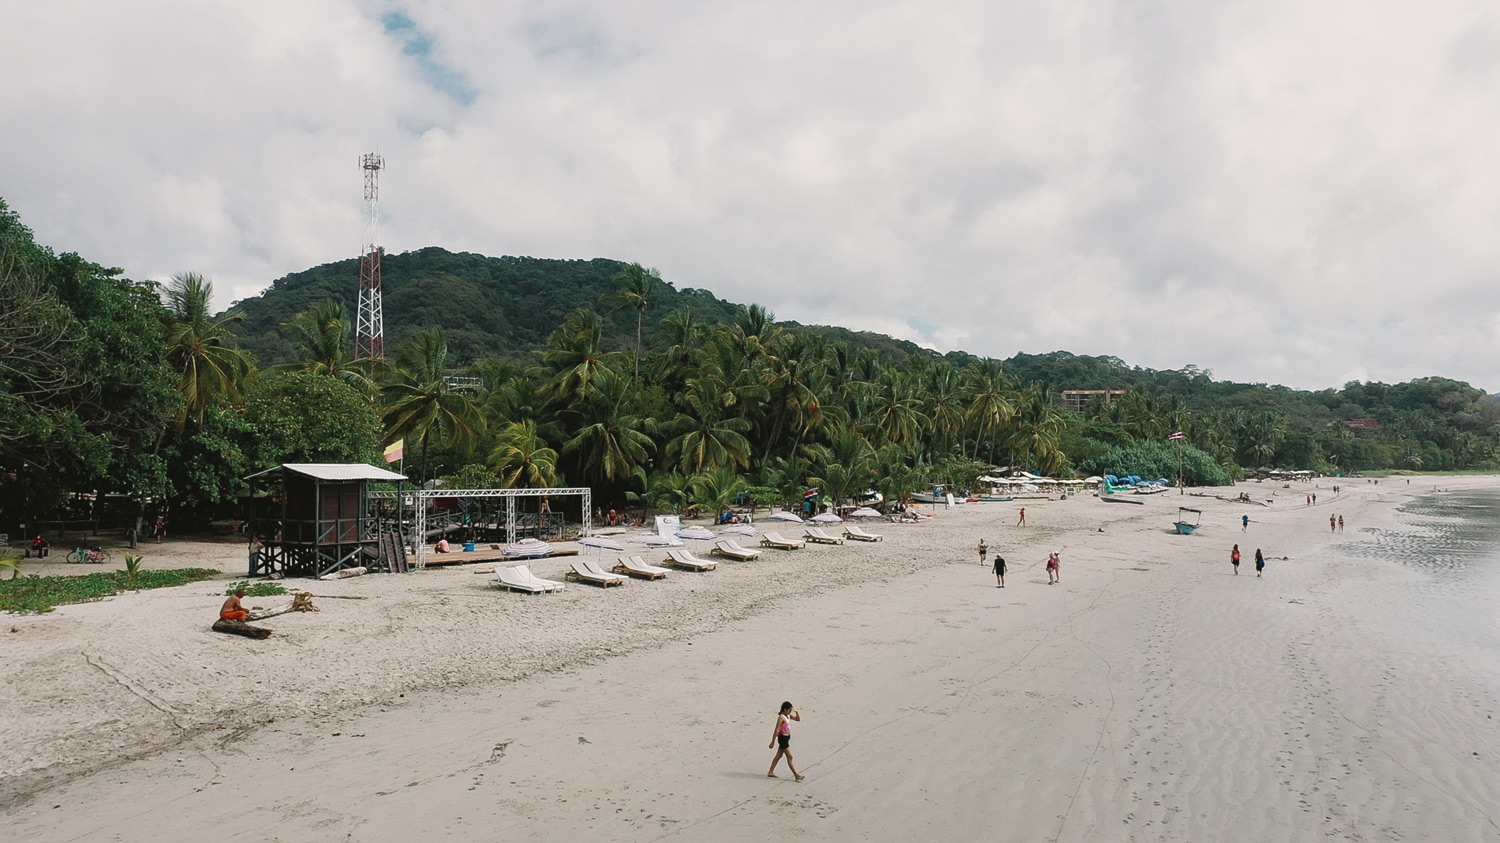 Samara Beach, located on the Nicoya Peninsula in the Guanacaste province